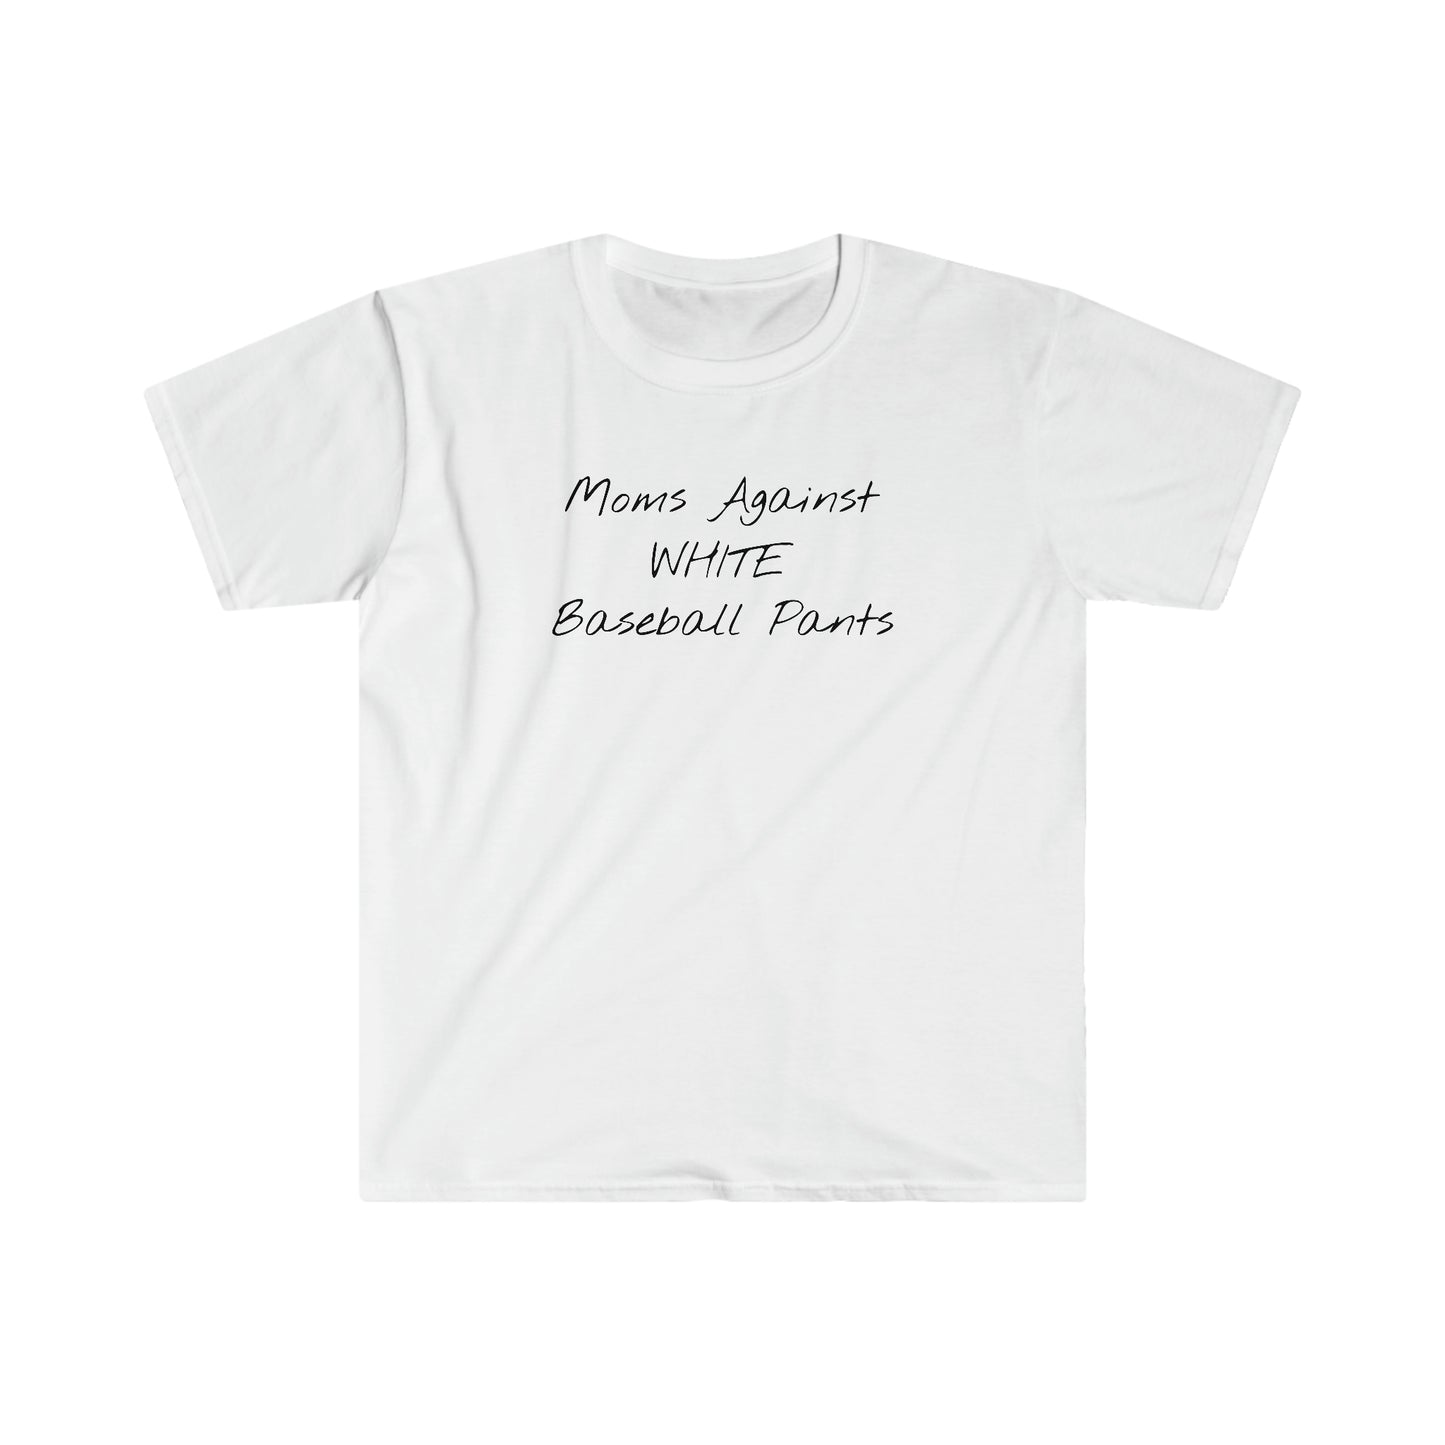 "Moms Against White Baseball Pants" Softstyle T-Shirt